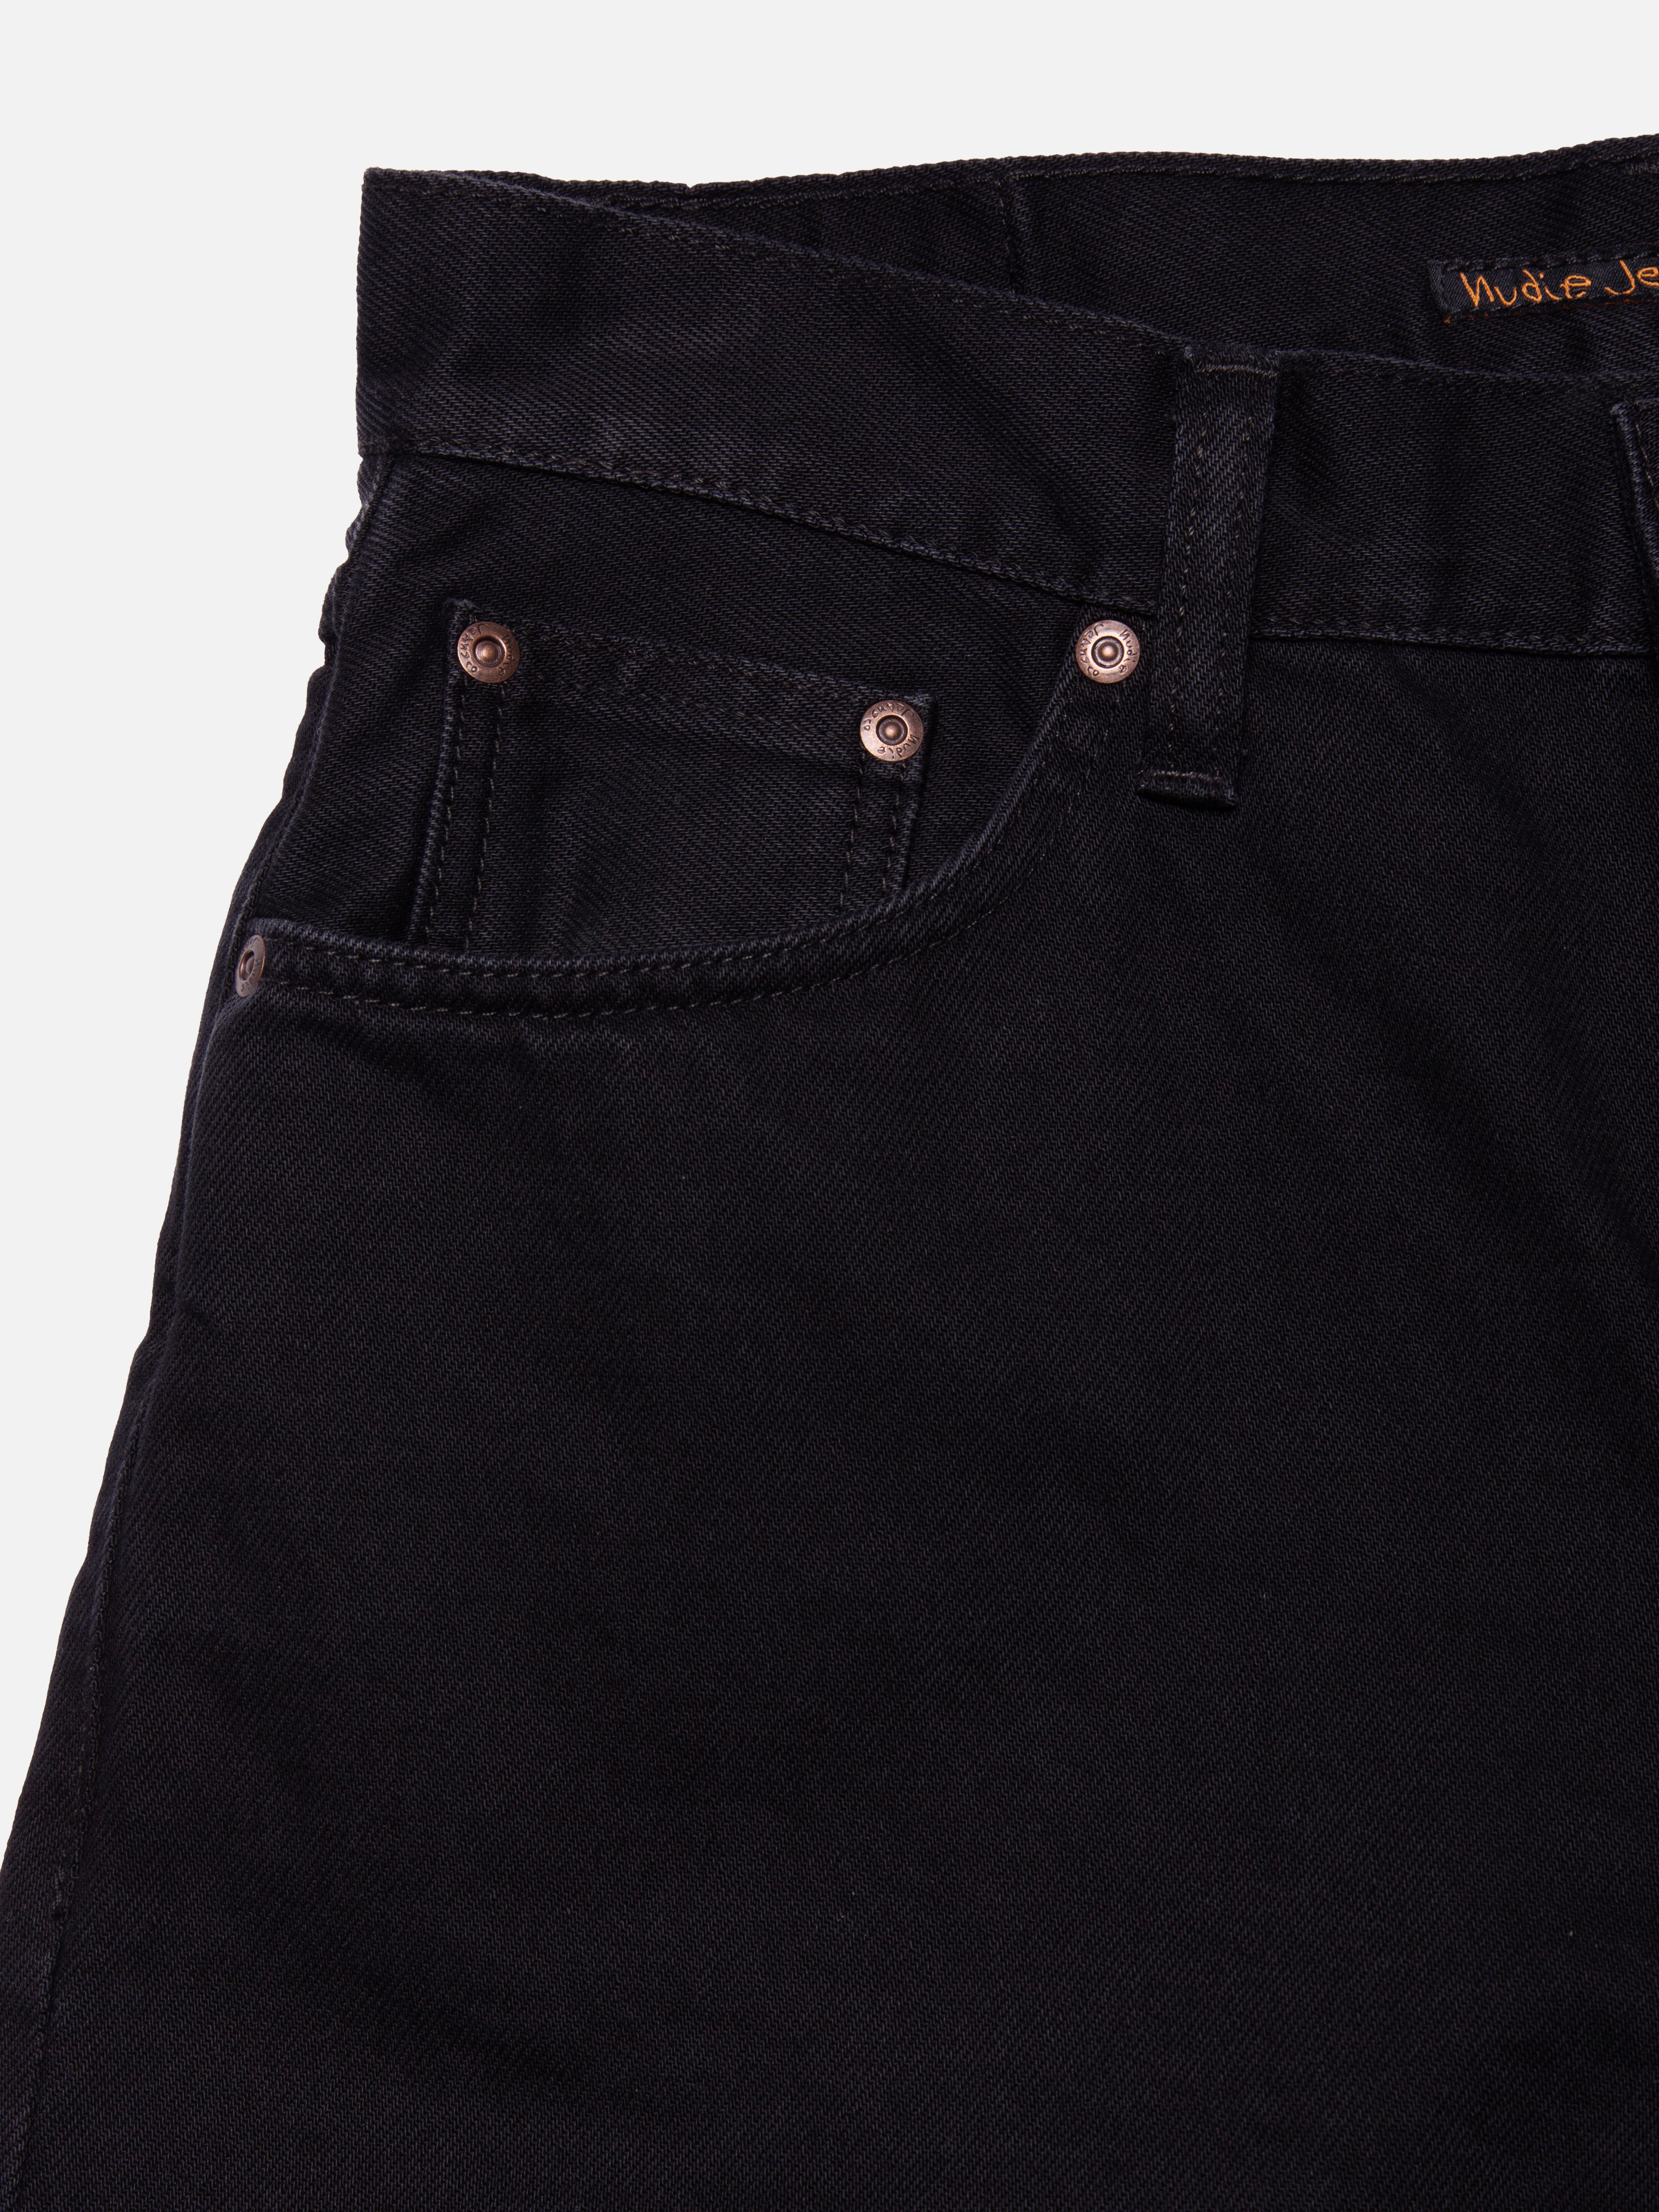 Jeans-Shorts Seth - Aged Black